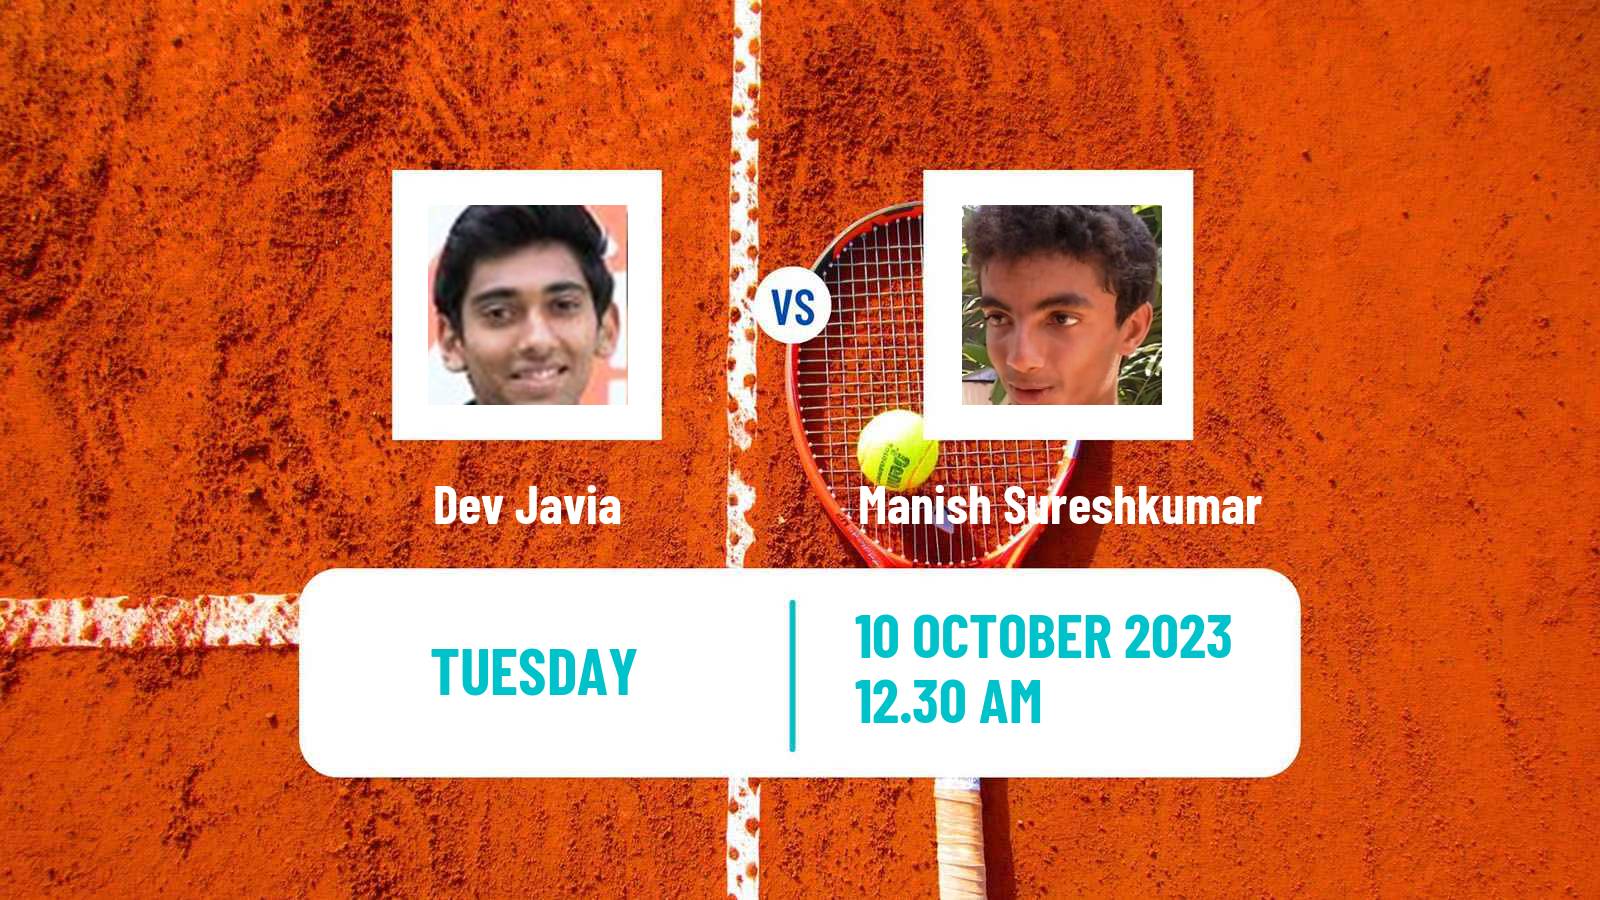 Tennis ITF M15 Ahmedabad Men Dev Javia - Manish Sureshkumar